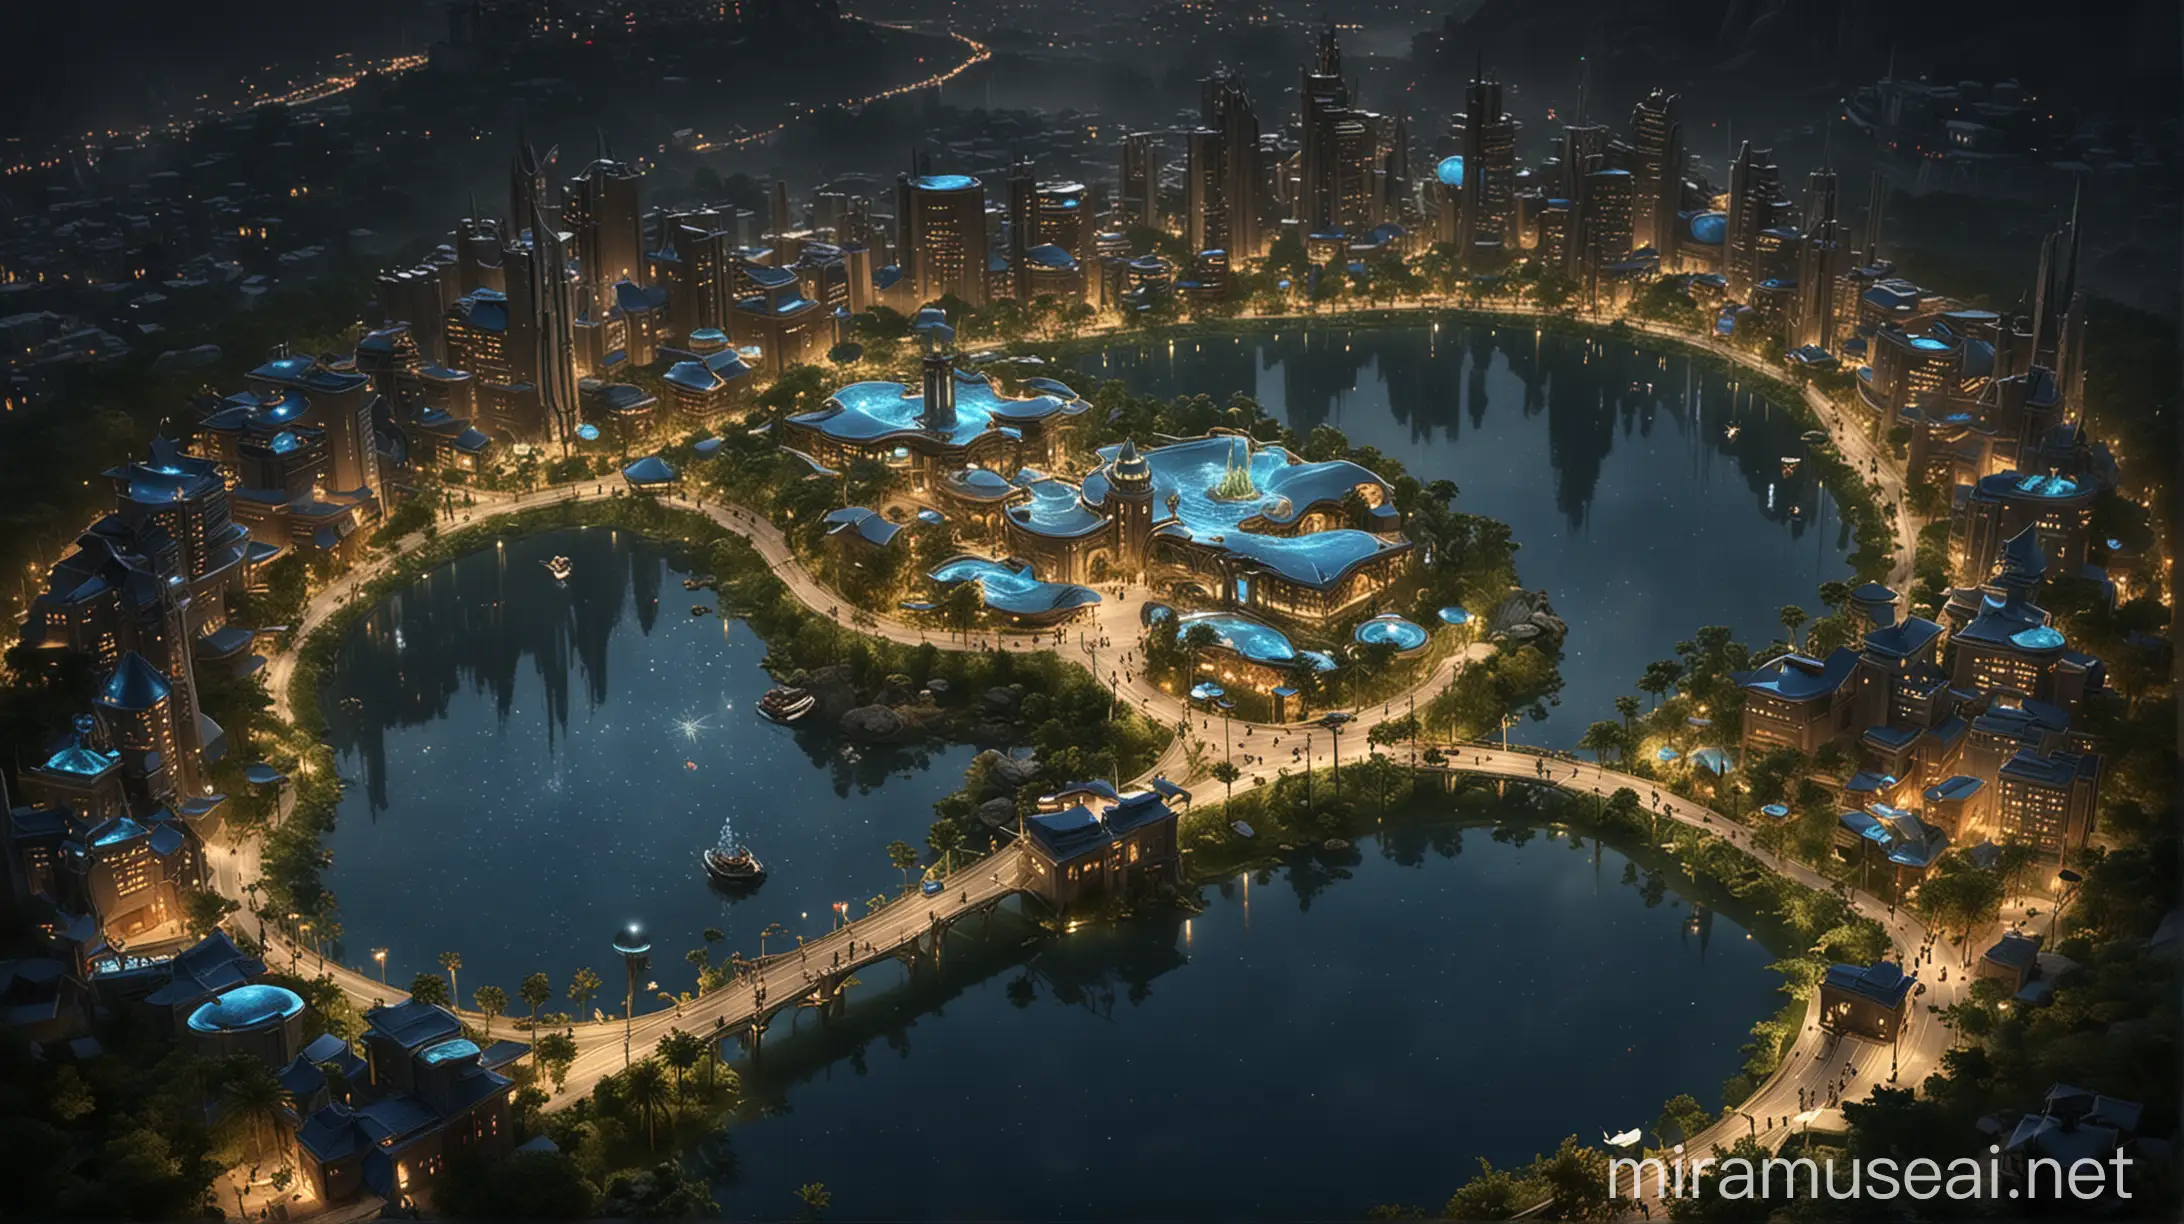 Design a Mythological Flying City Inspired by Avatar